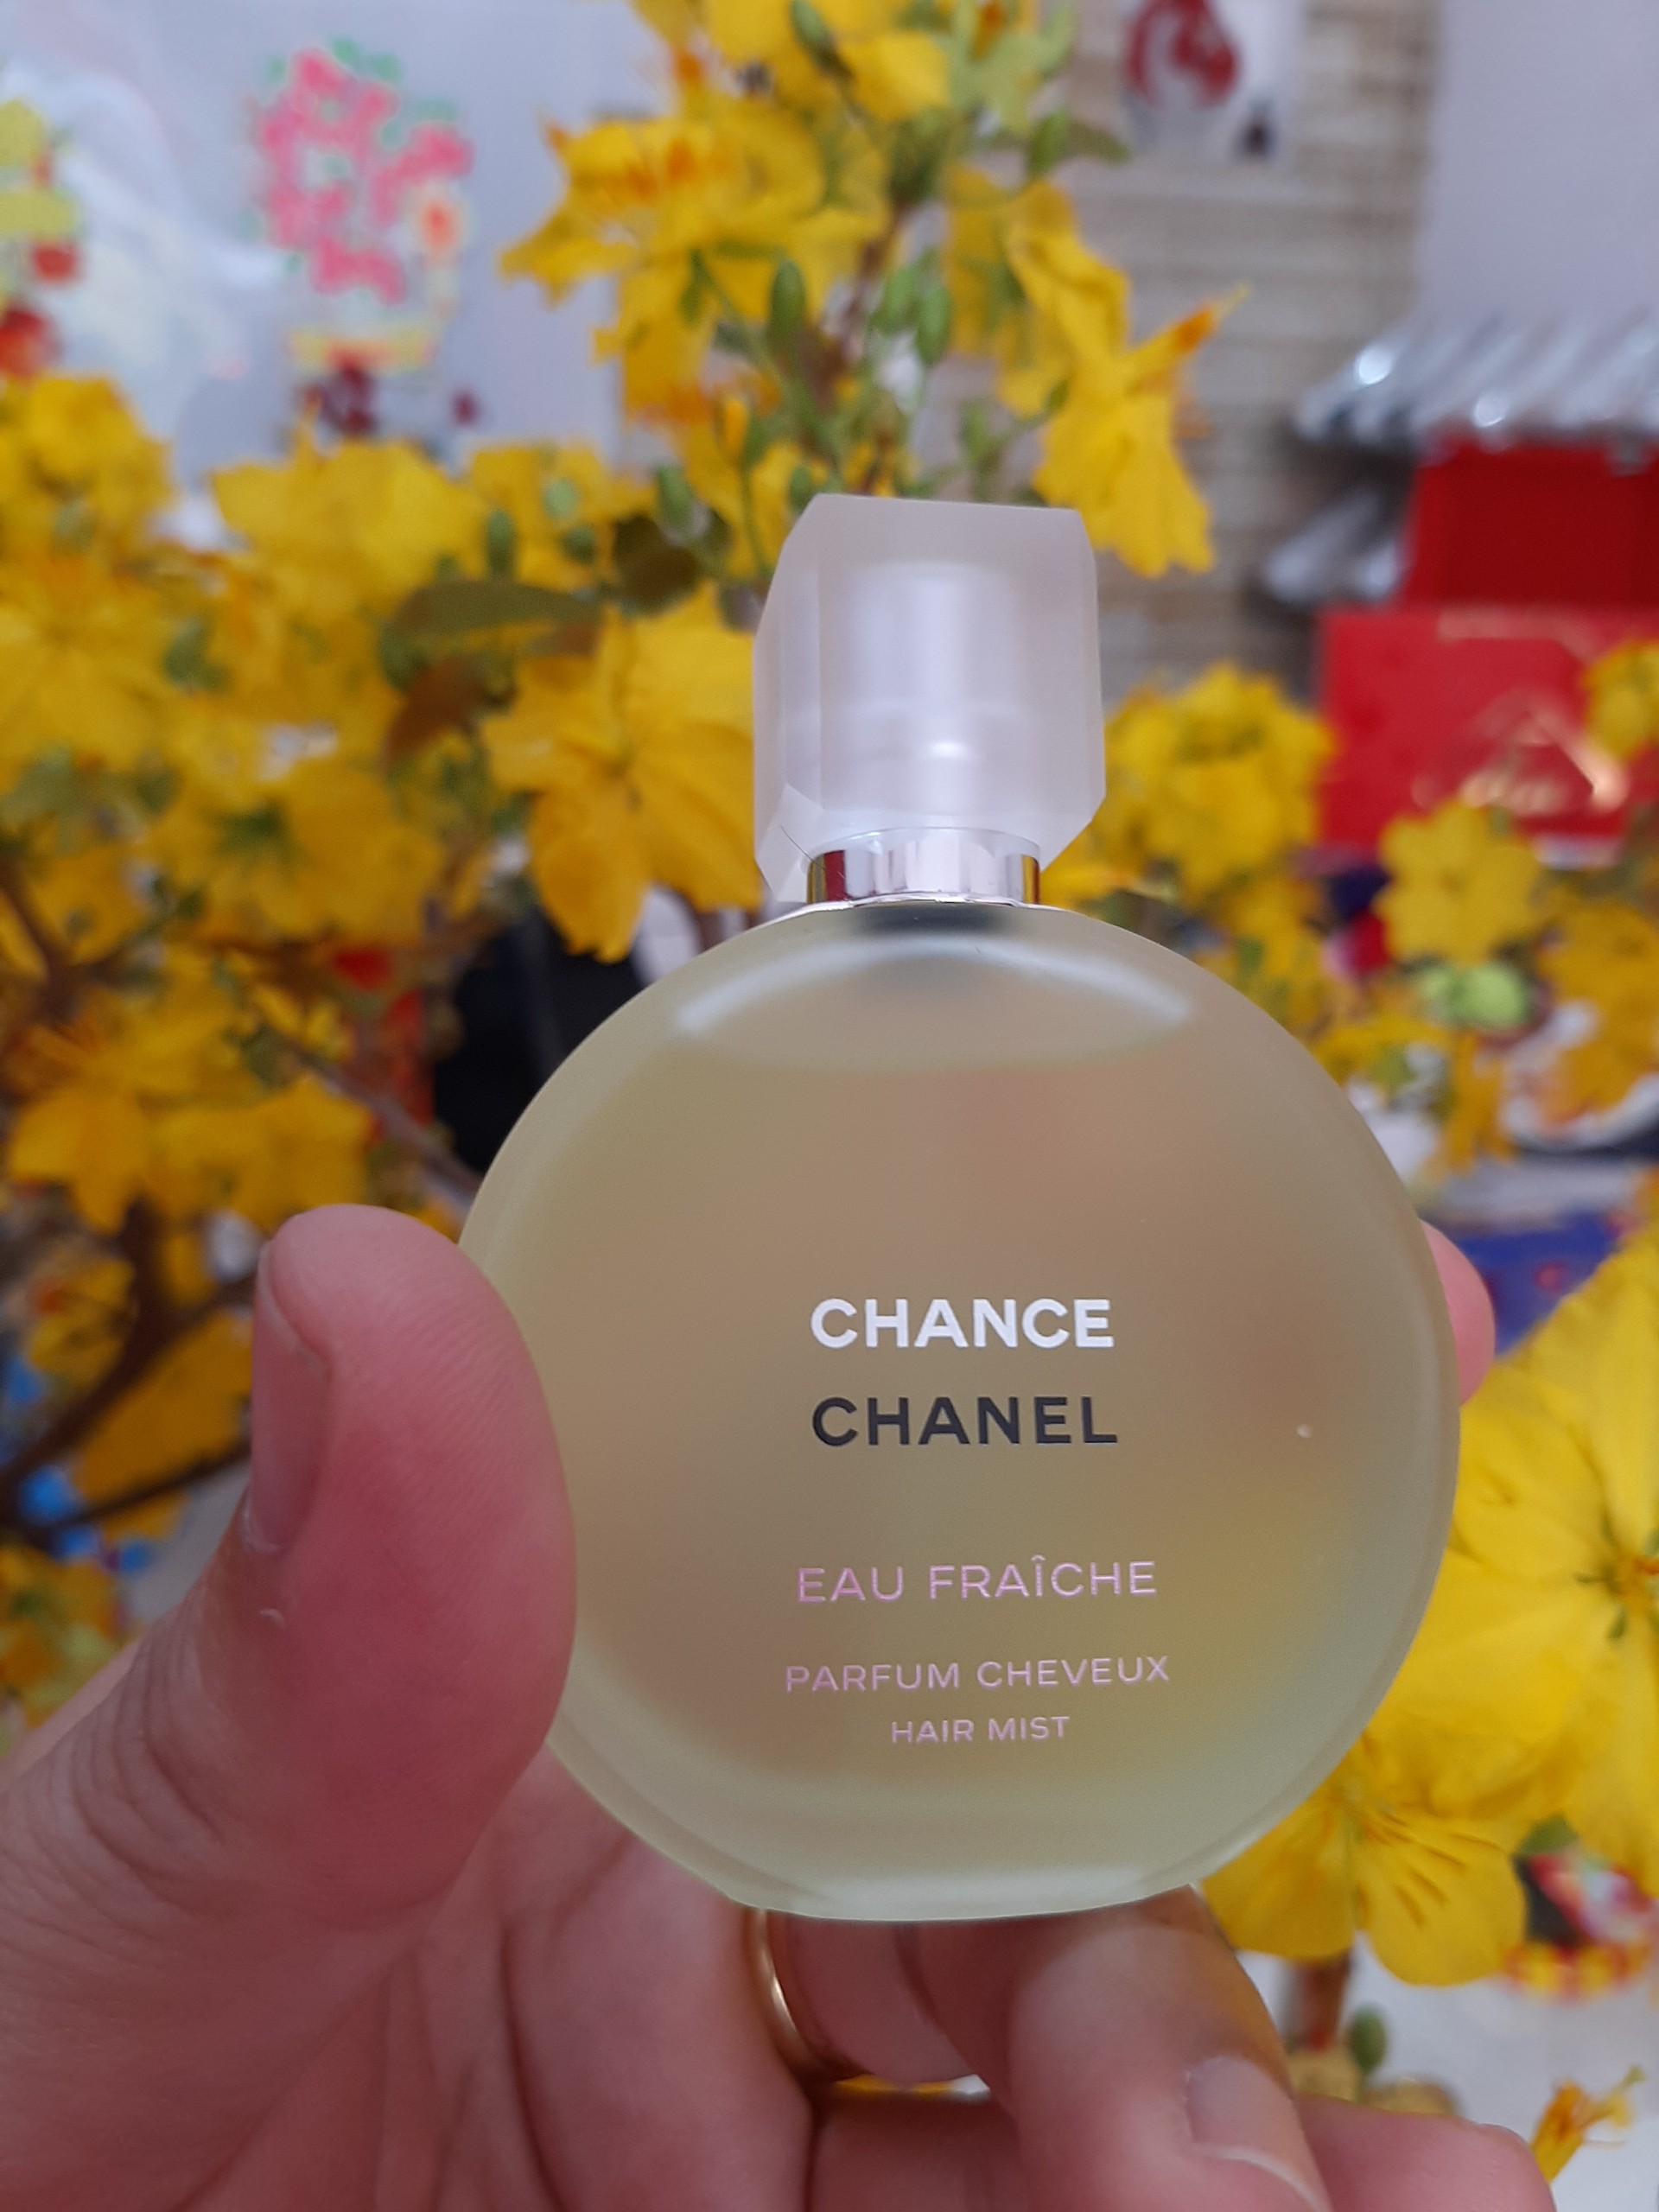 Chanel No5 Le Parfum Cheveux Hair Mist 40ml   httpswwwfragrancekenyacom